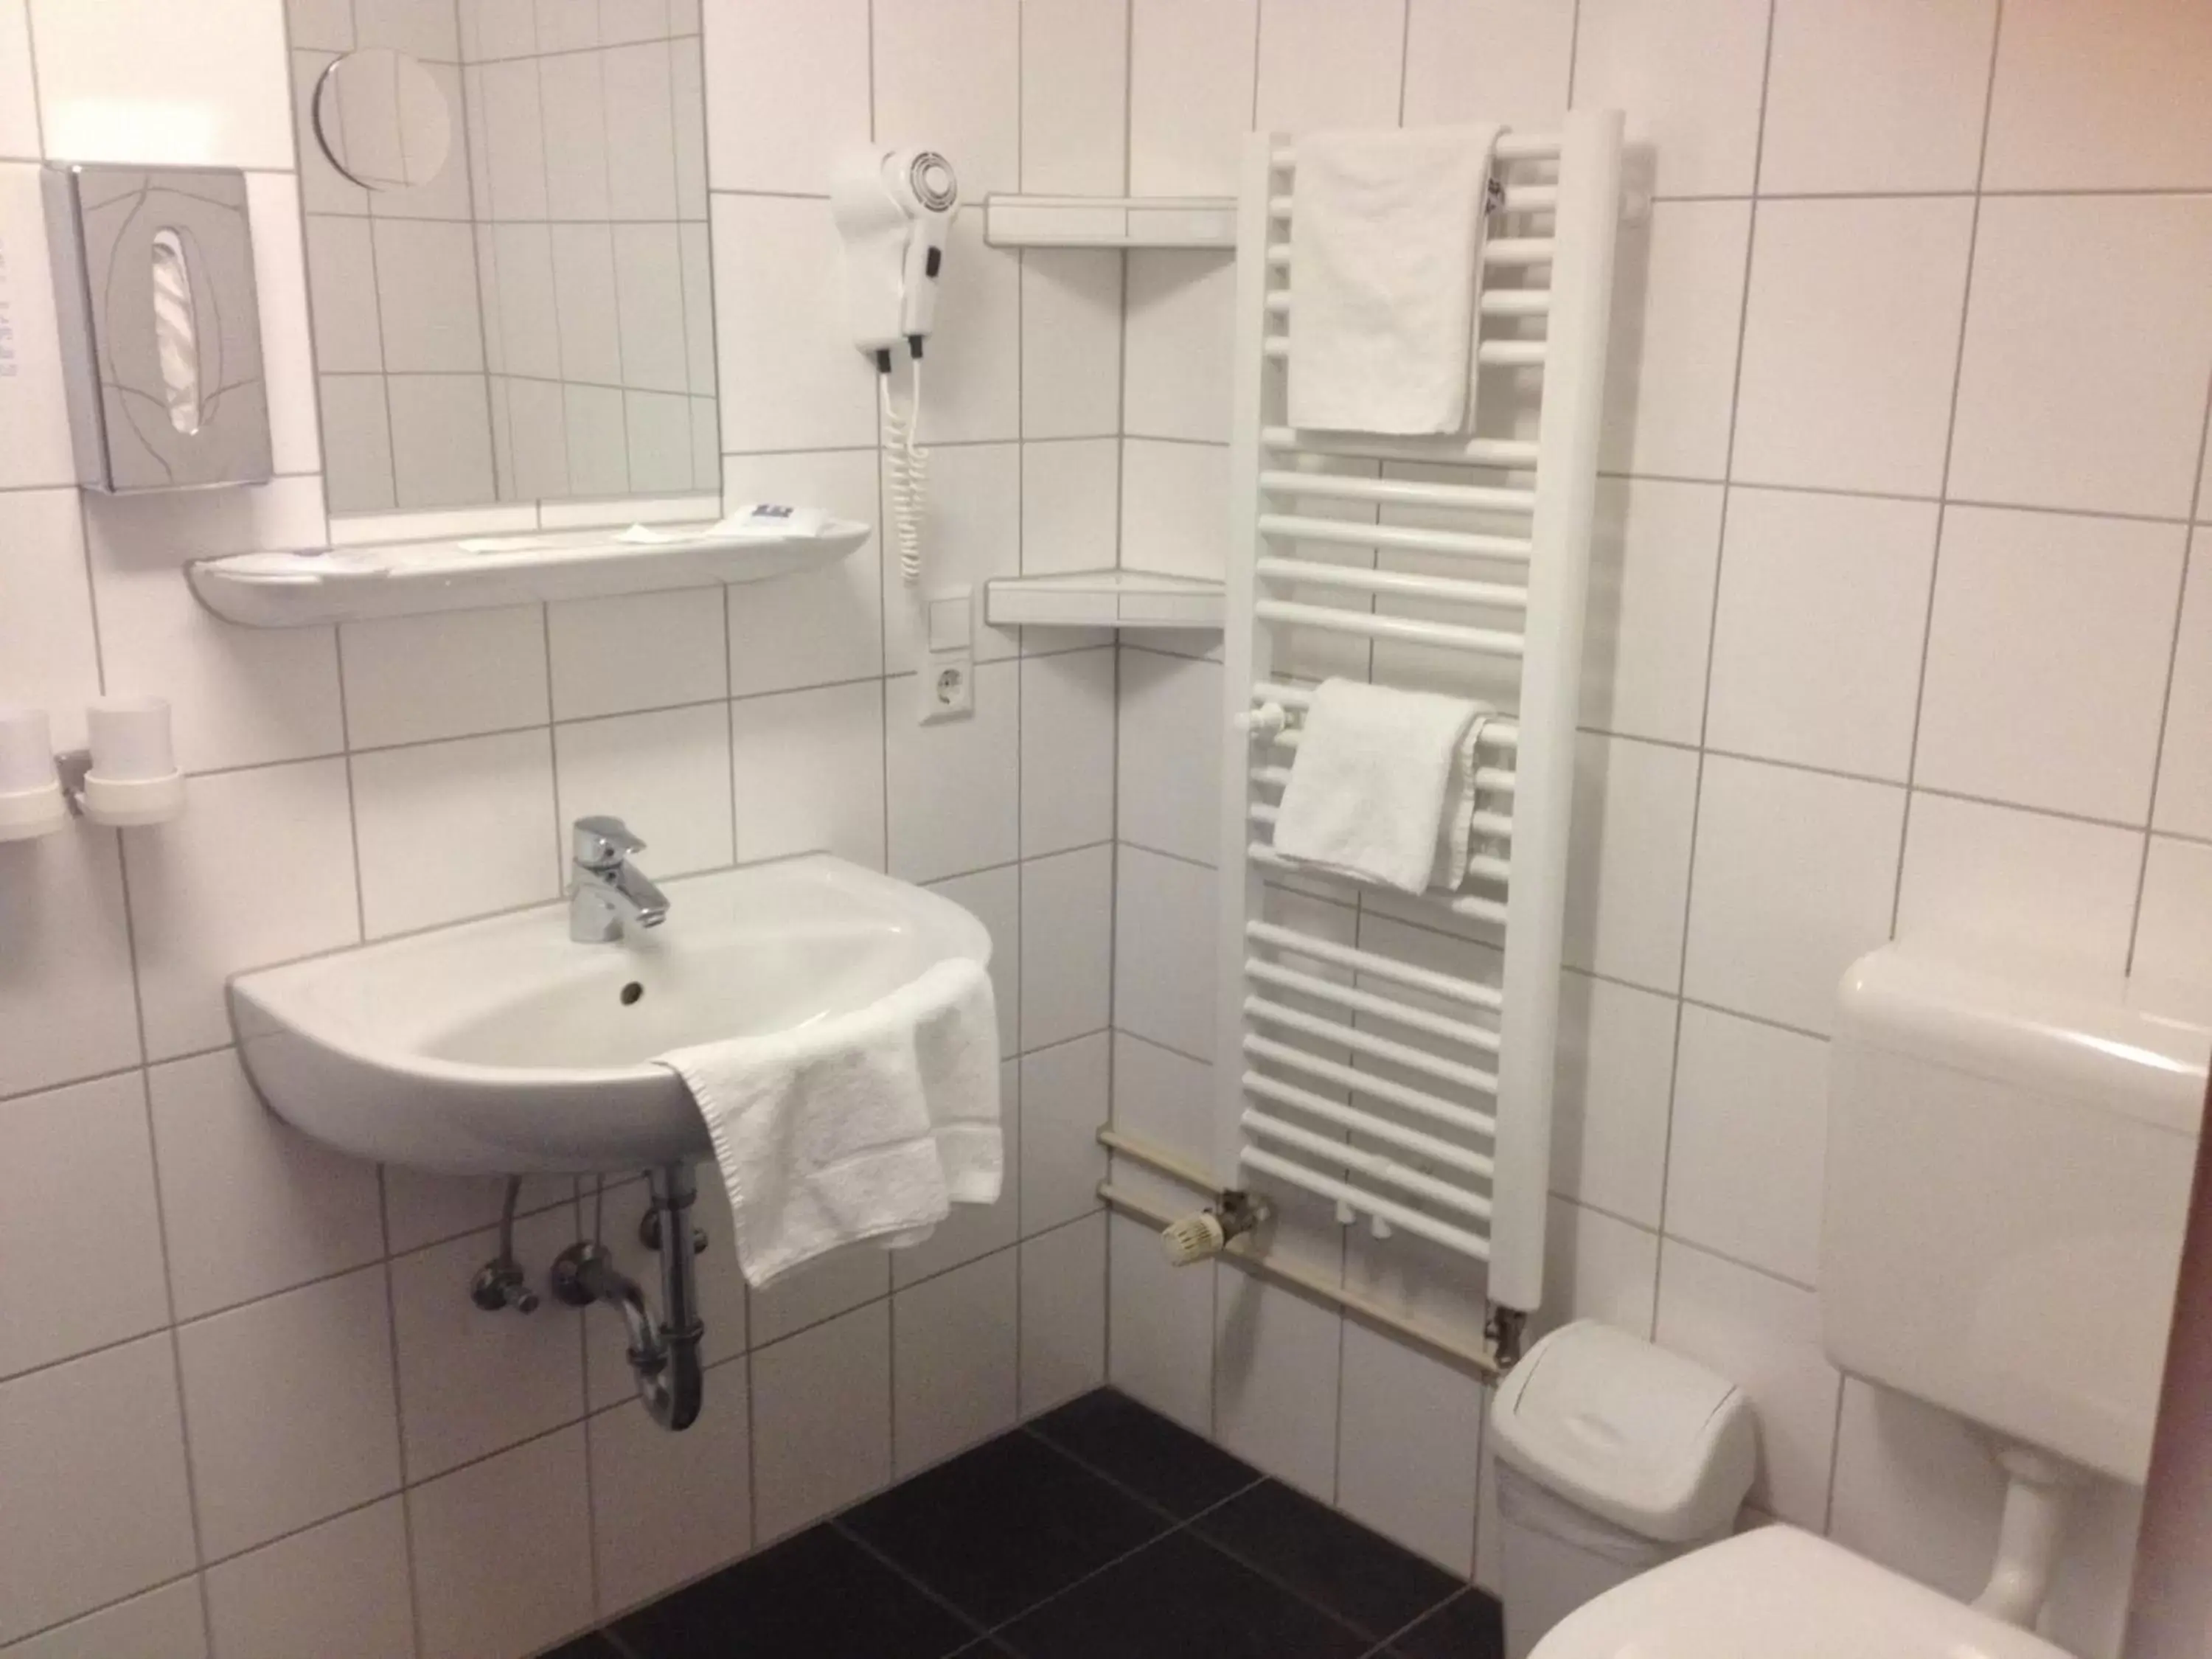 Photo of the whole room, Bathroom in Hotel Rheinlust